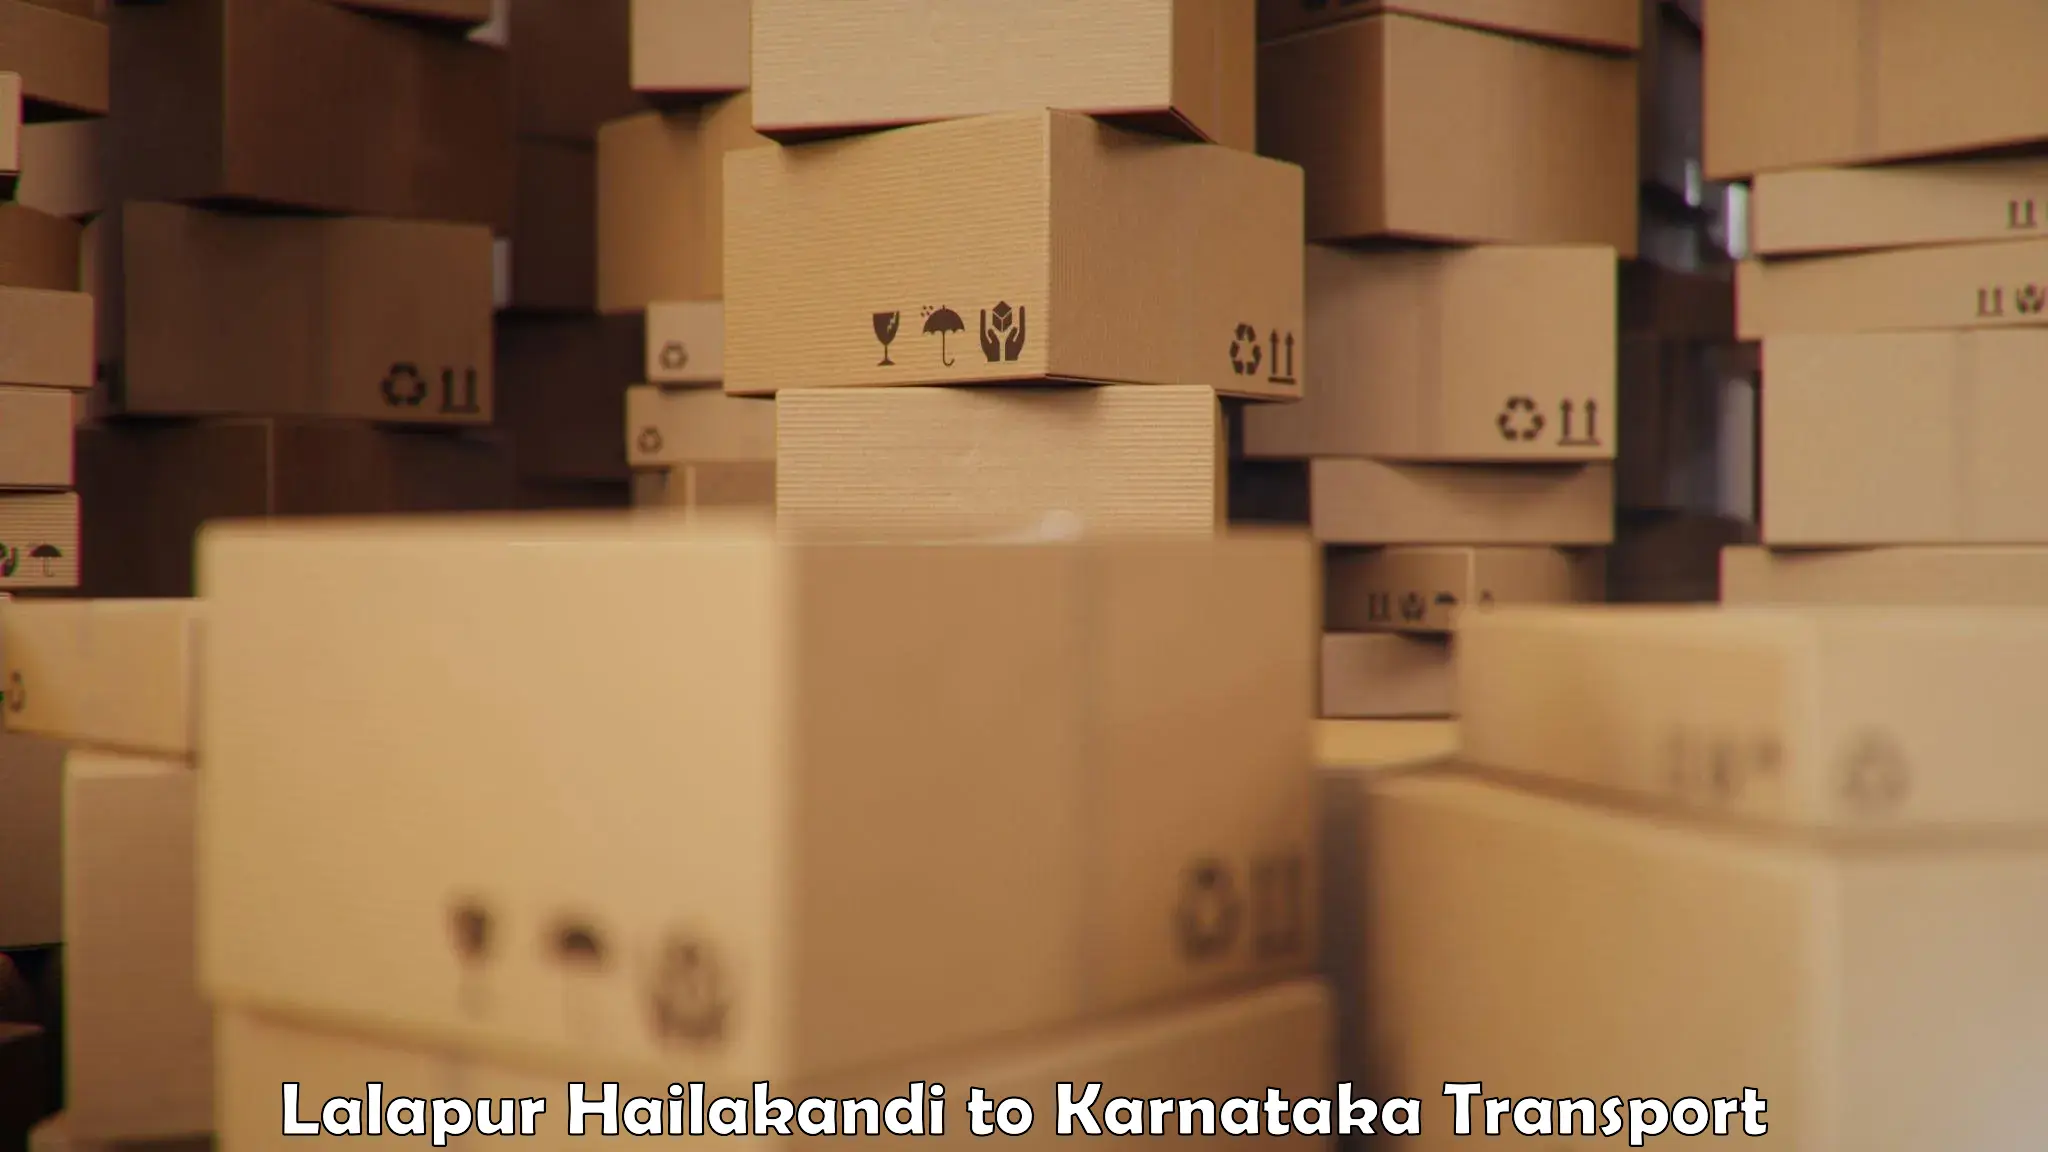 Road transport online services Lalapur Hailakandi to Ramanathapura